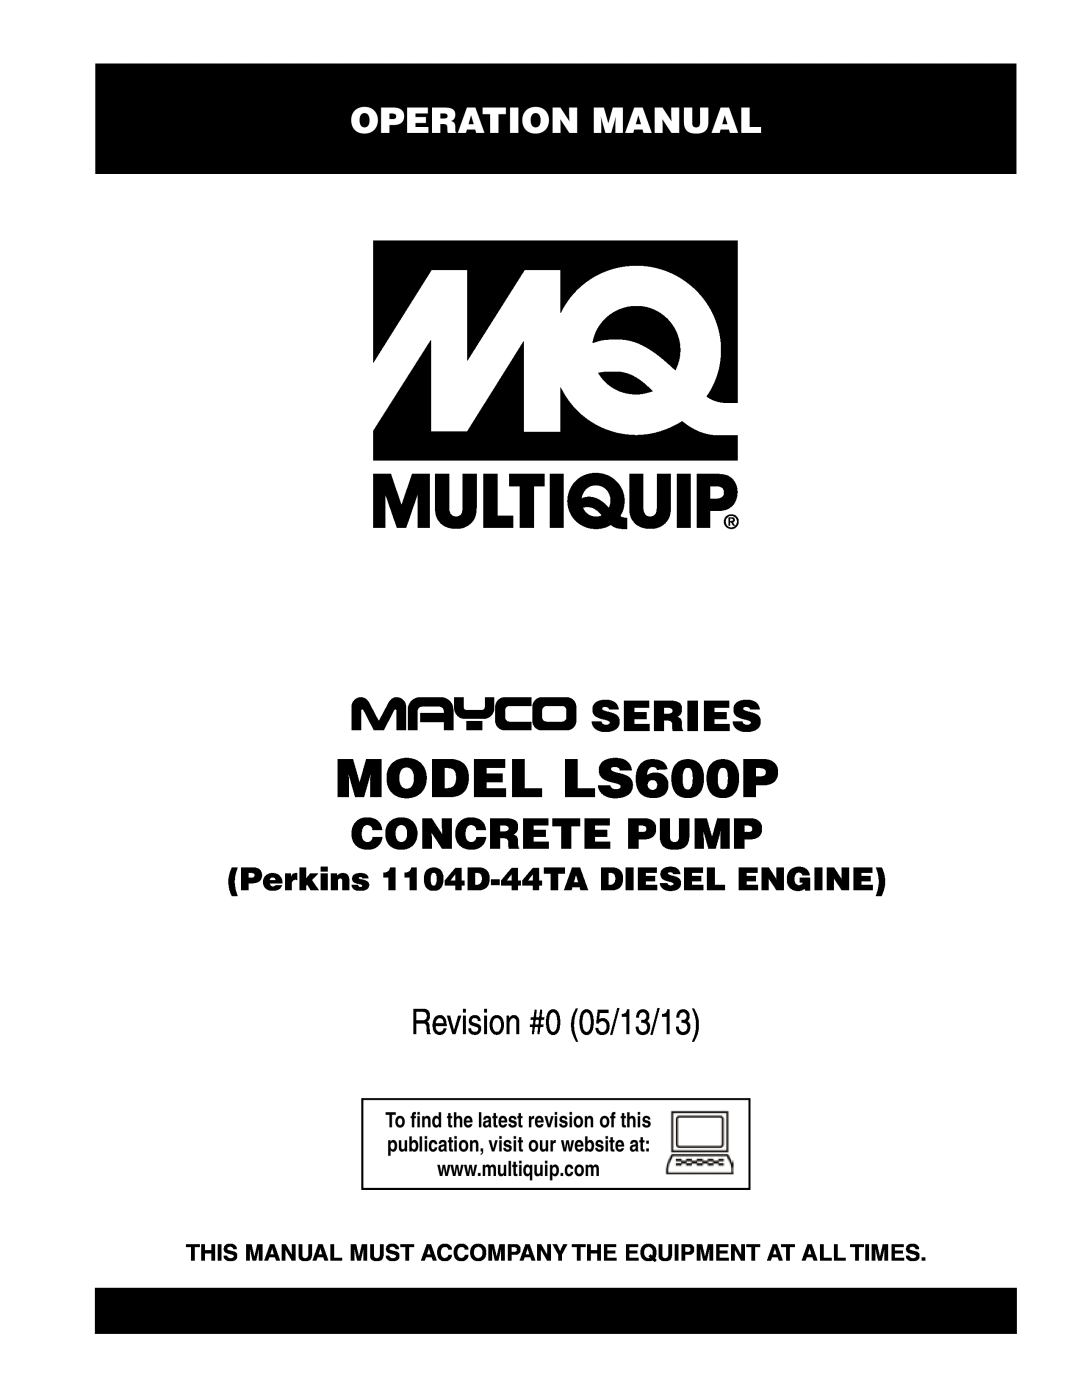 Multiquip operation manual Operation Manual, MODEL LS600P, Series, concrete pump, Revision #0 05/13/13 